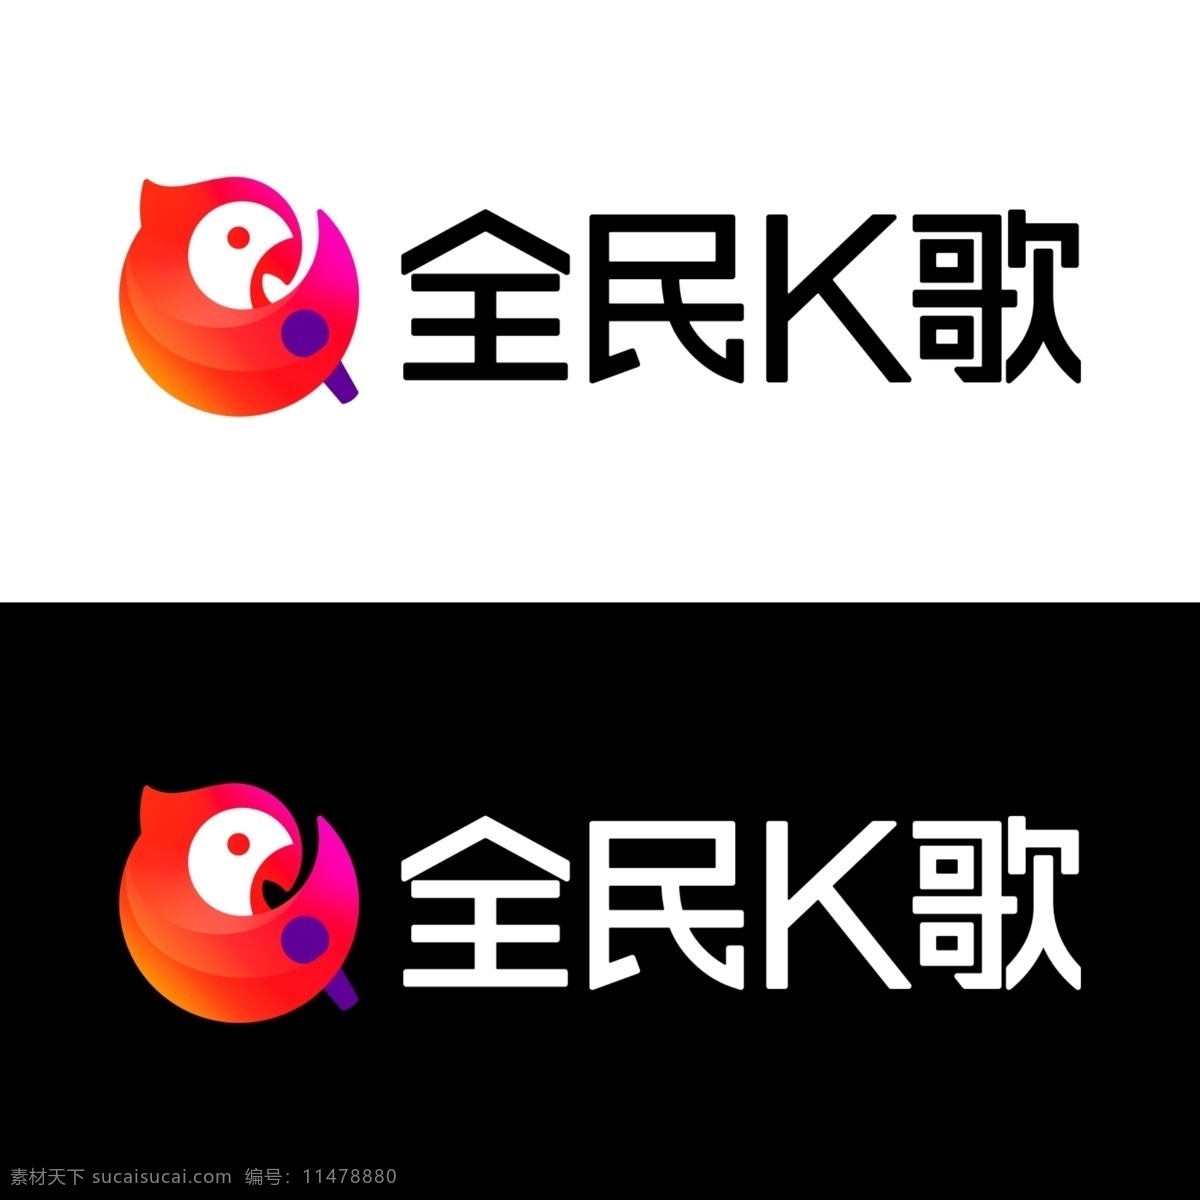 全民 k 歌 logo 全民k歌 k歌 单位 logo设计